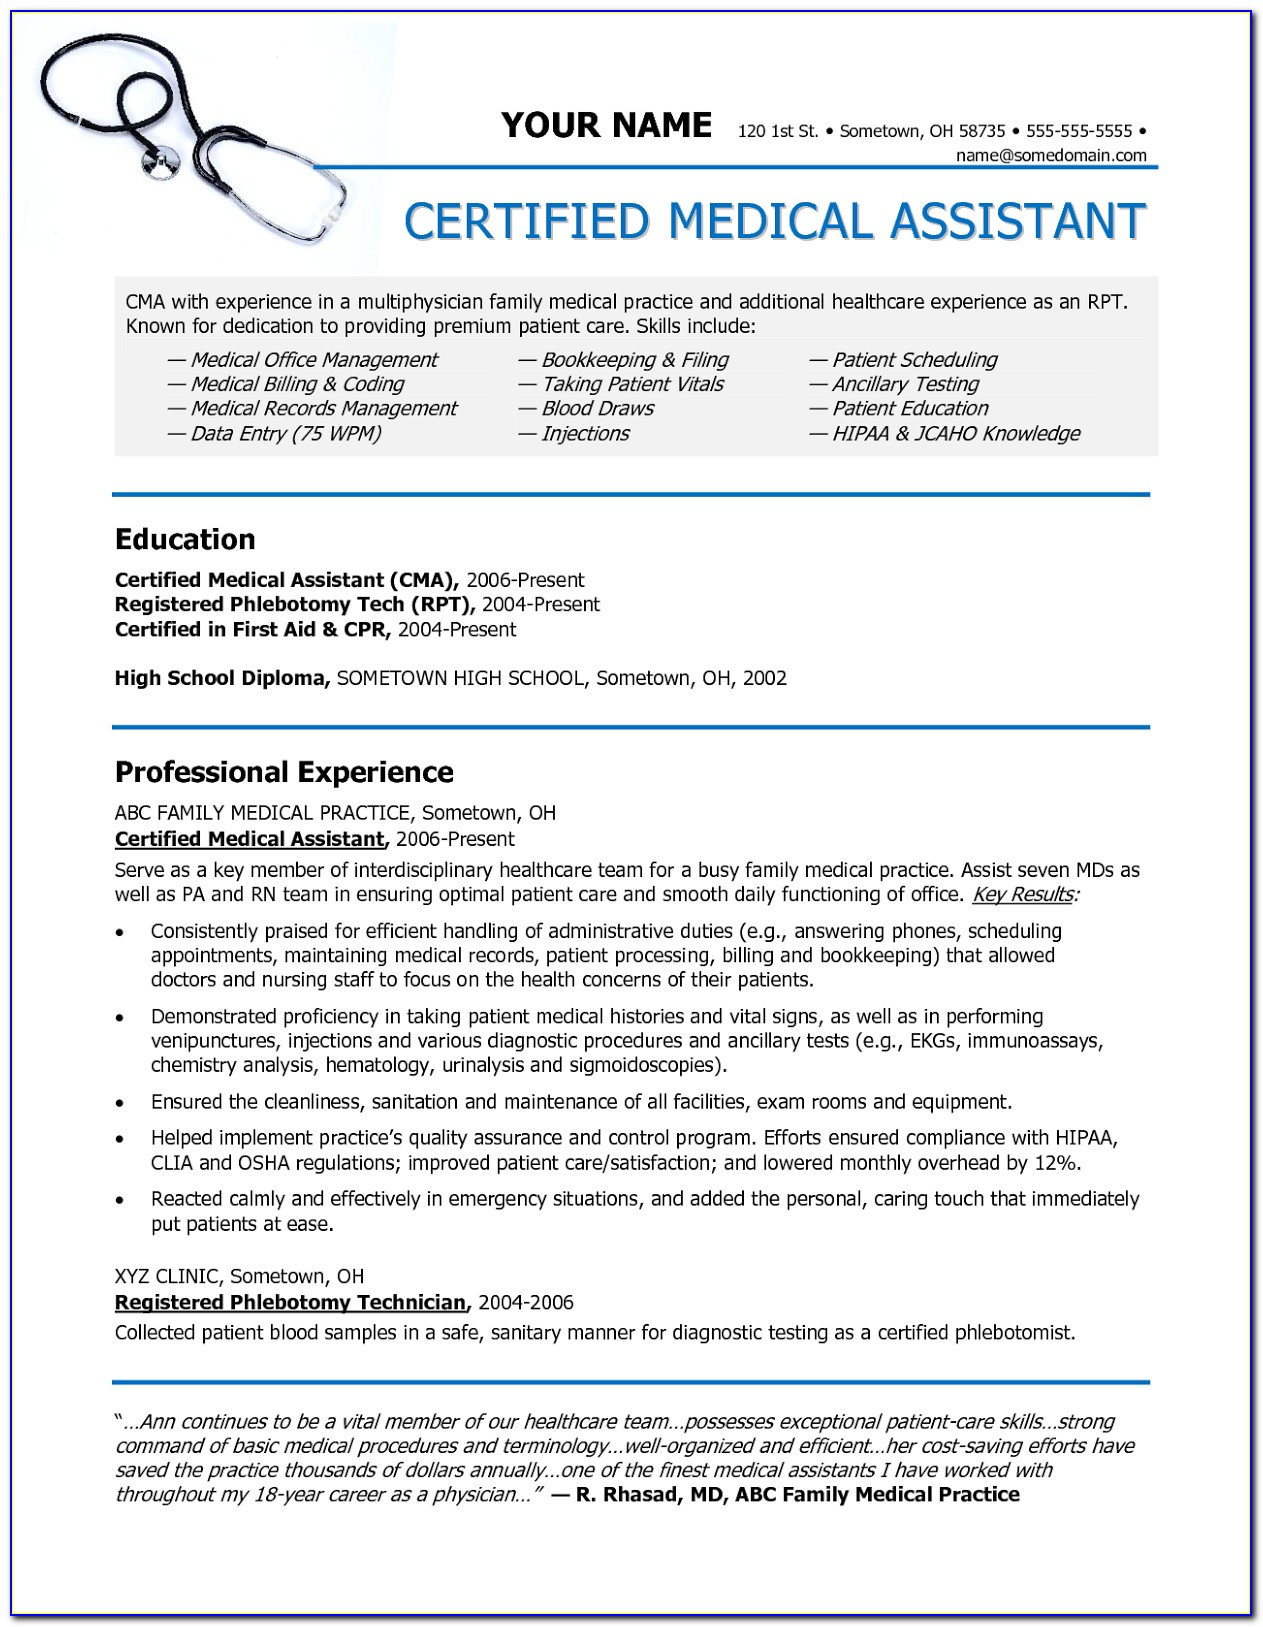 Resume Samples For Medical Office Assistant